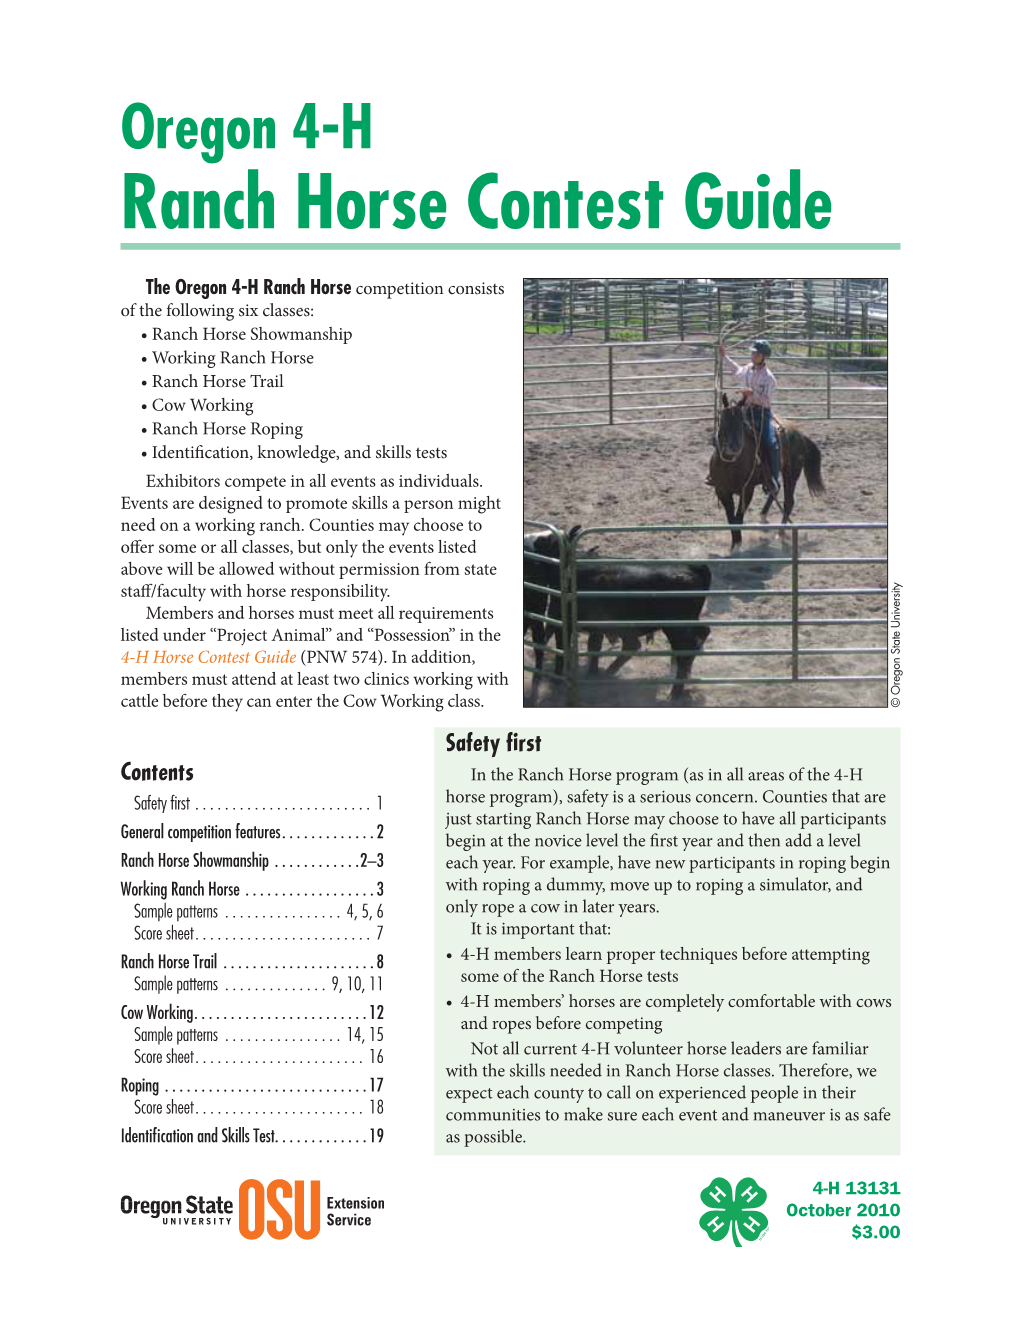 Oregon 4-H Ranch Horse Contest Guide